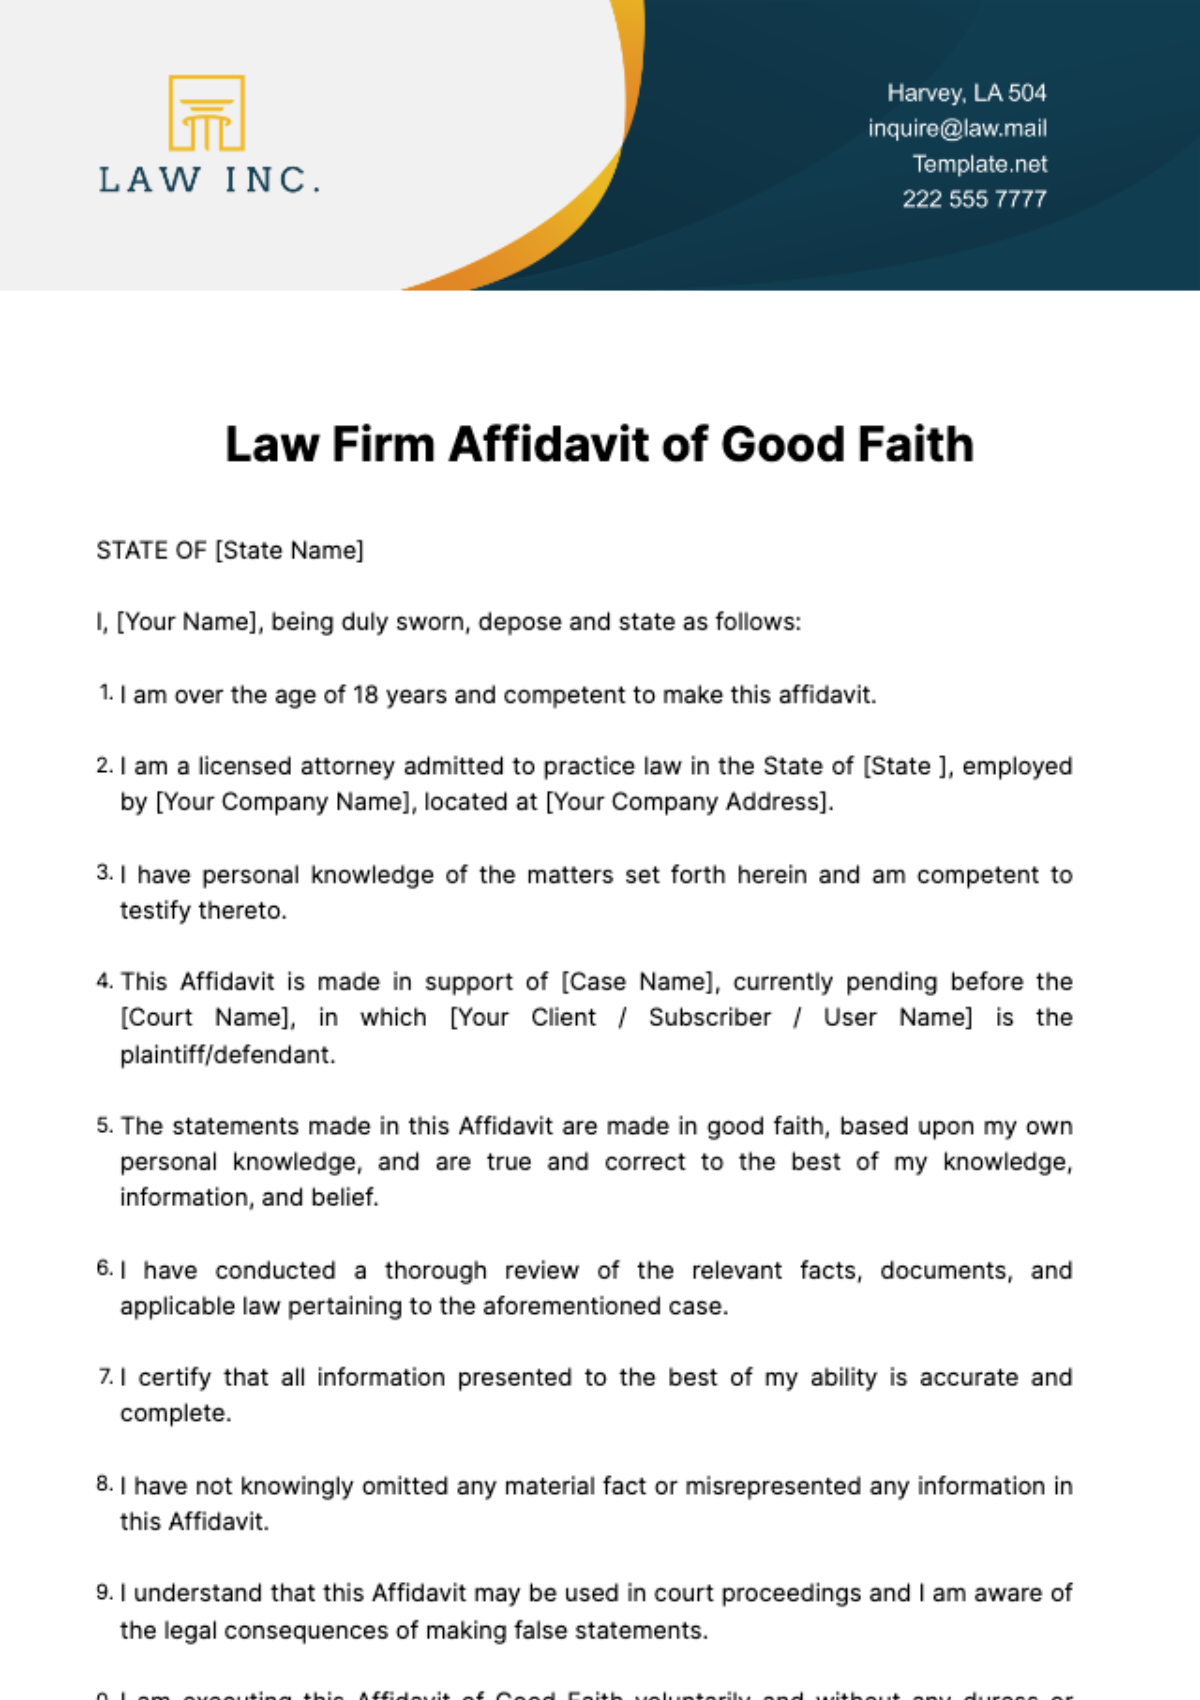 Law Firm Affidavit of Good Faith Template